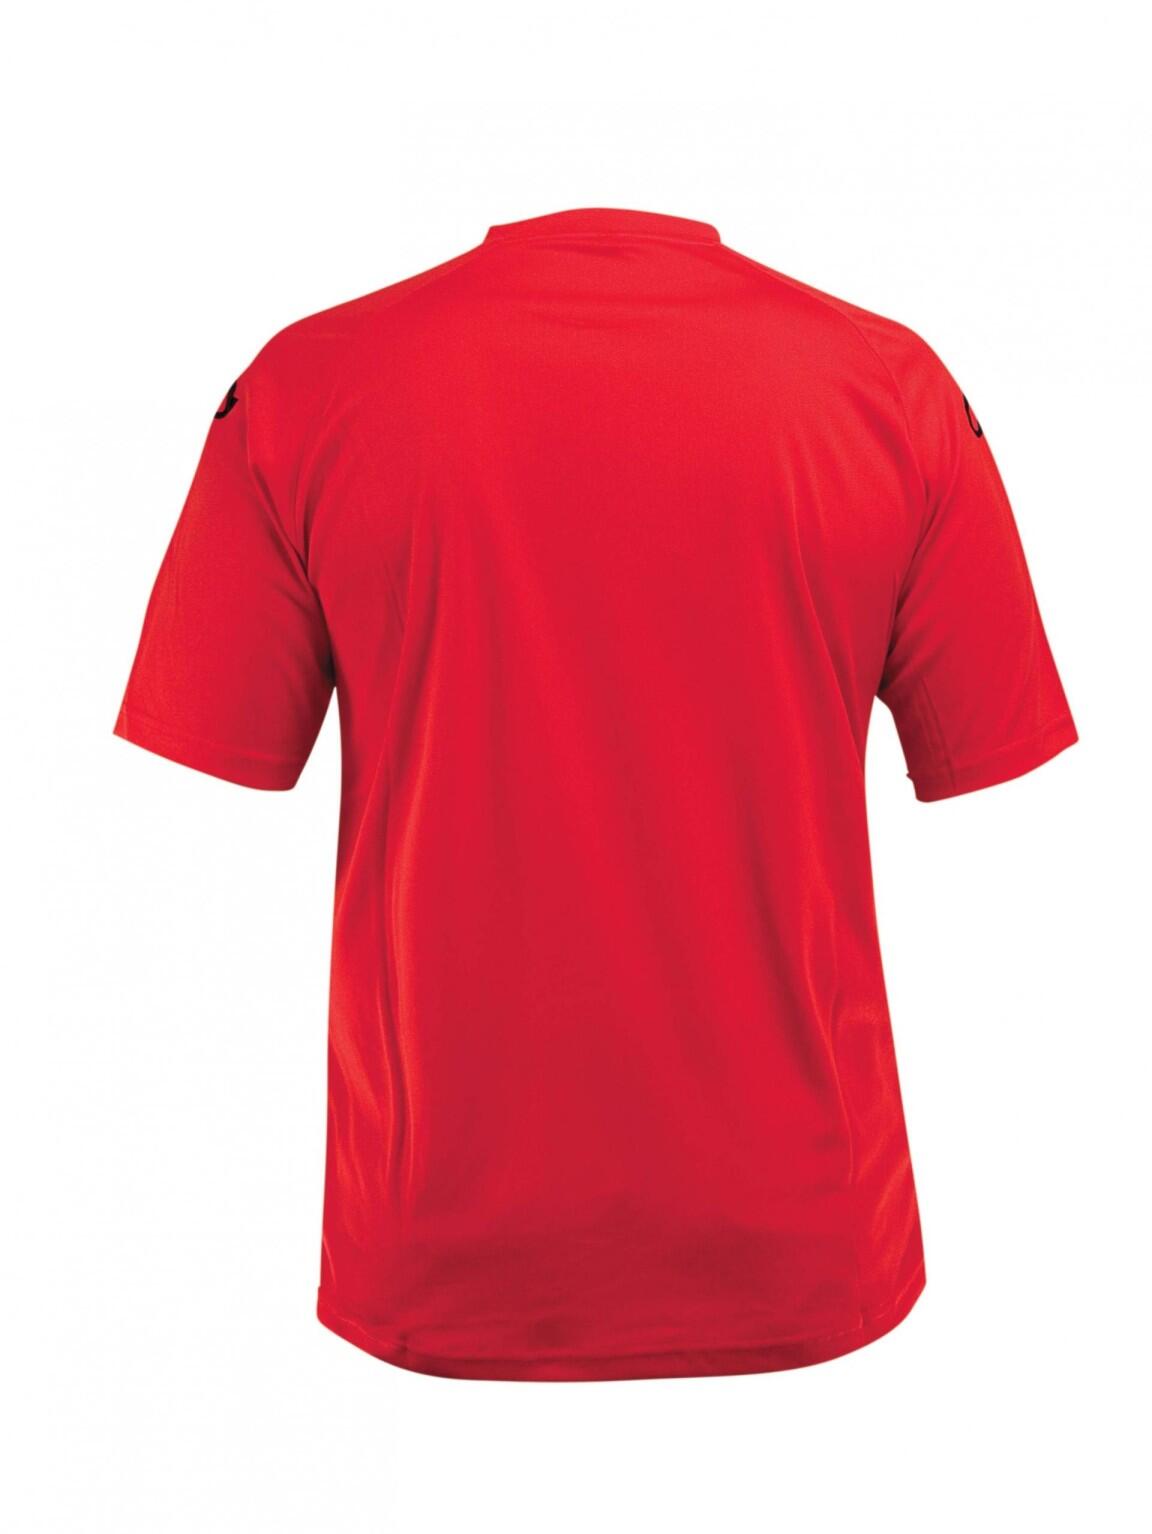 Kurzarm-Trainings-Shirt ATLANTIS v. ACERBIS , rot